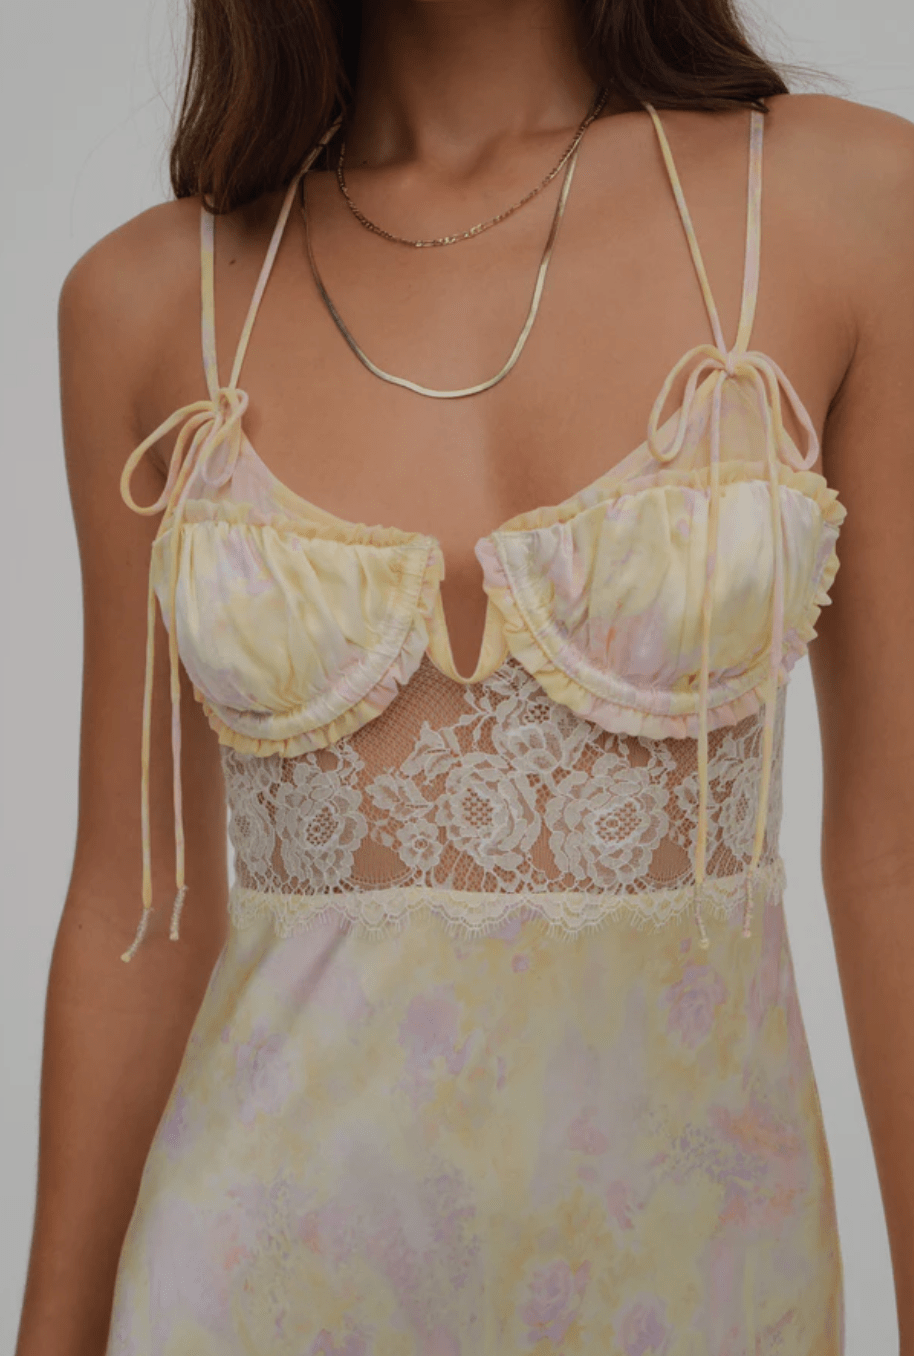 Amora Floral Maxi Dress by for Love & Lemons